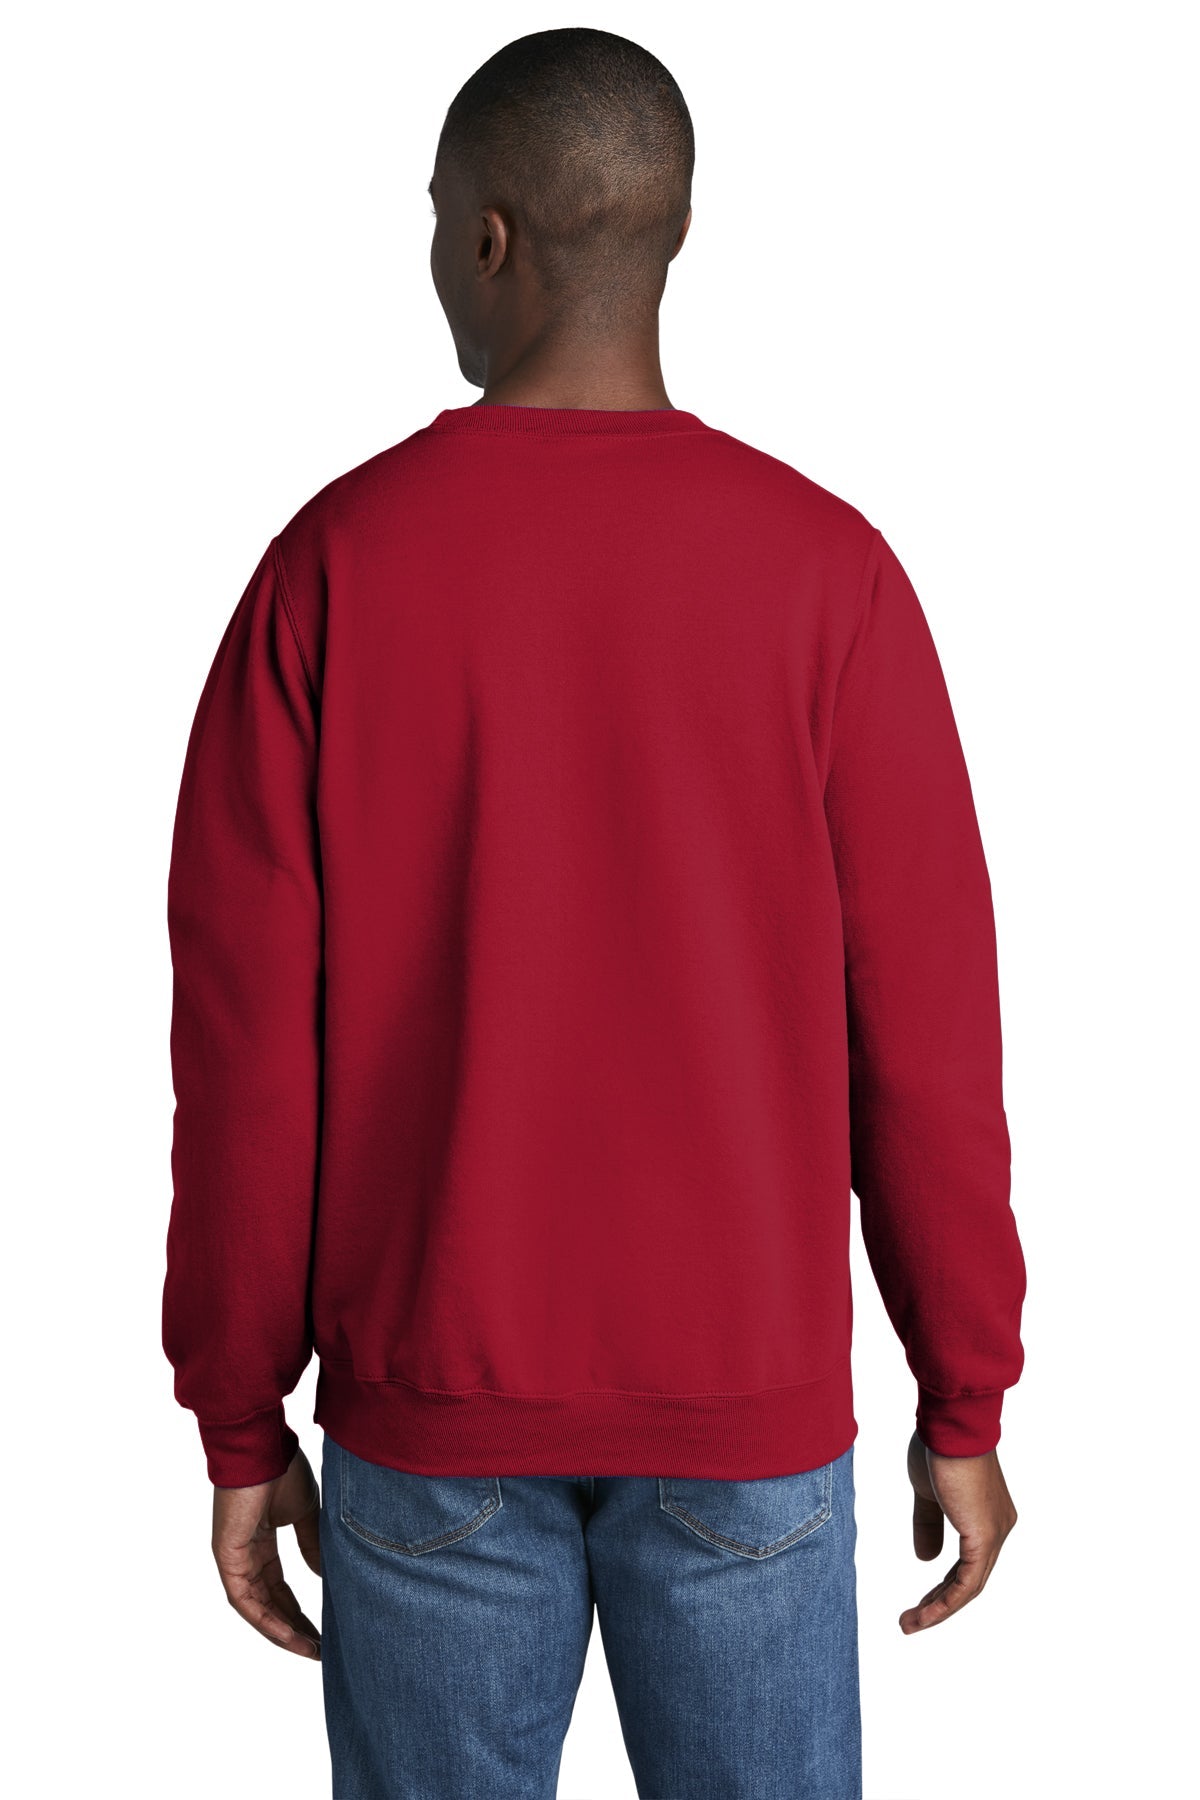 port & company_pc78 _red_company_logo_sweatshirts